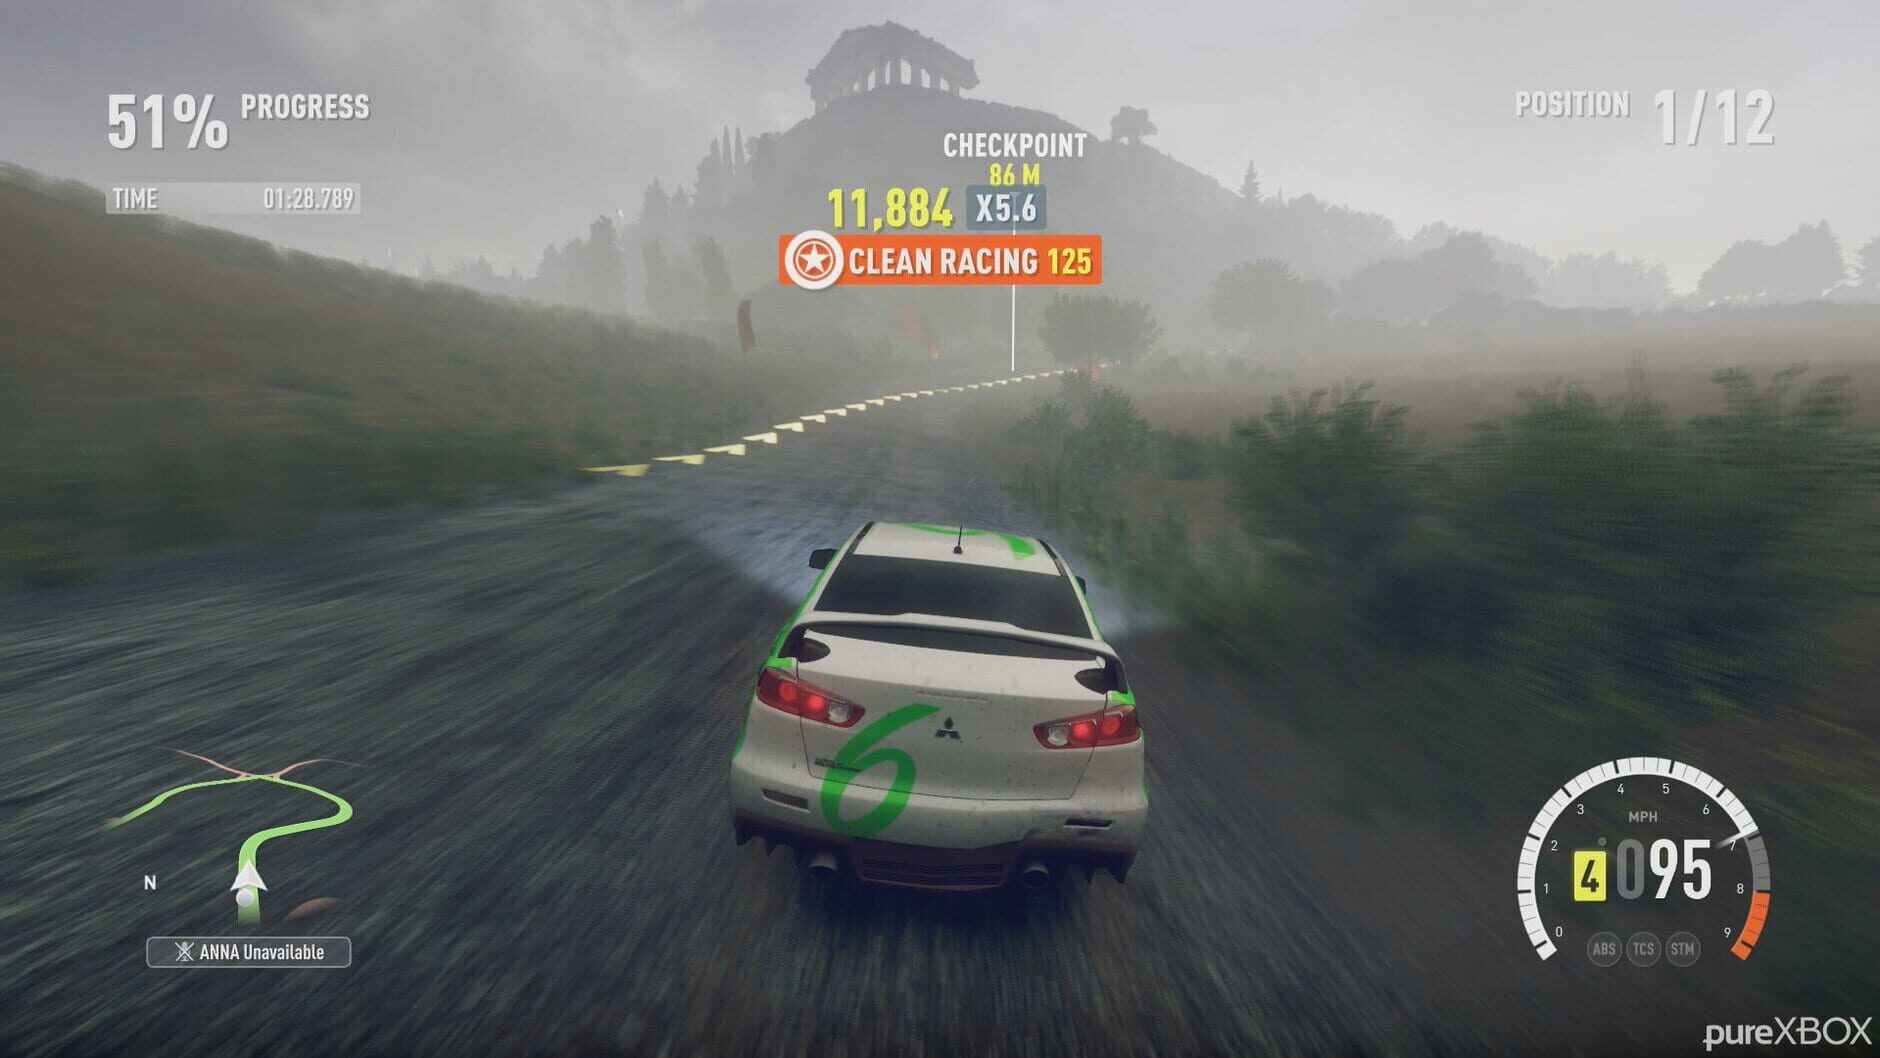 Screenshot for Forza Horizon 2: Storm Island